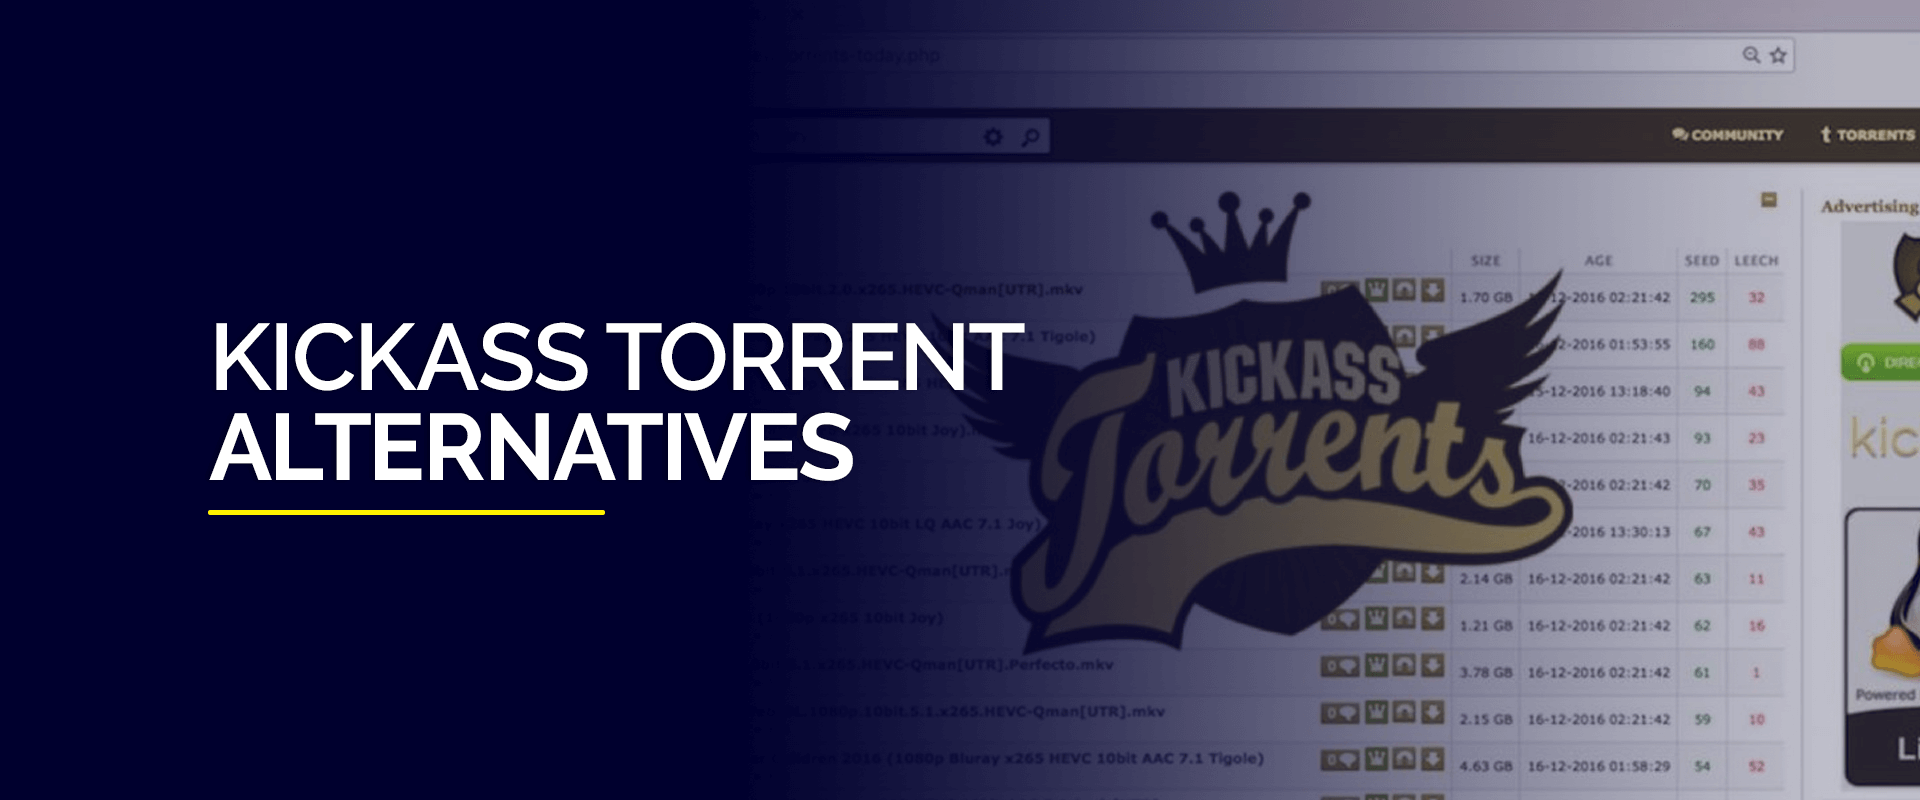 kickass torrent porn games for mac download